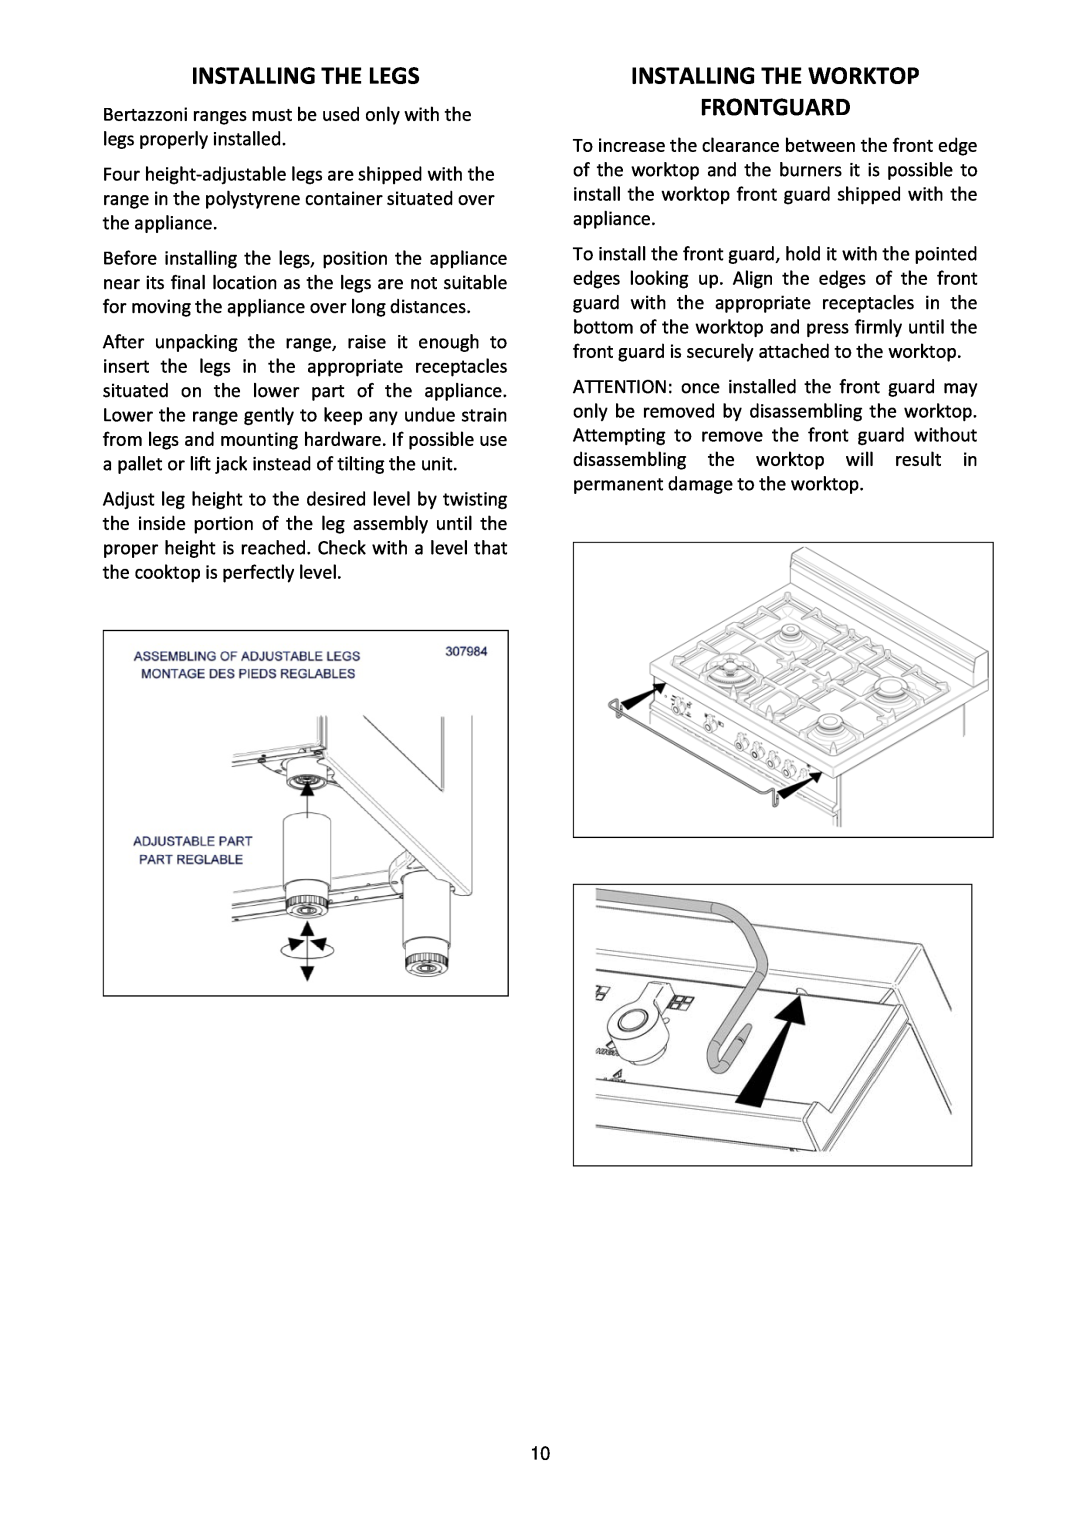 Bertazzoni MAS304DFMXE, M7S06ZA7X5DUG manual Installing The Legs, Installing The Worktop Frontguard 